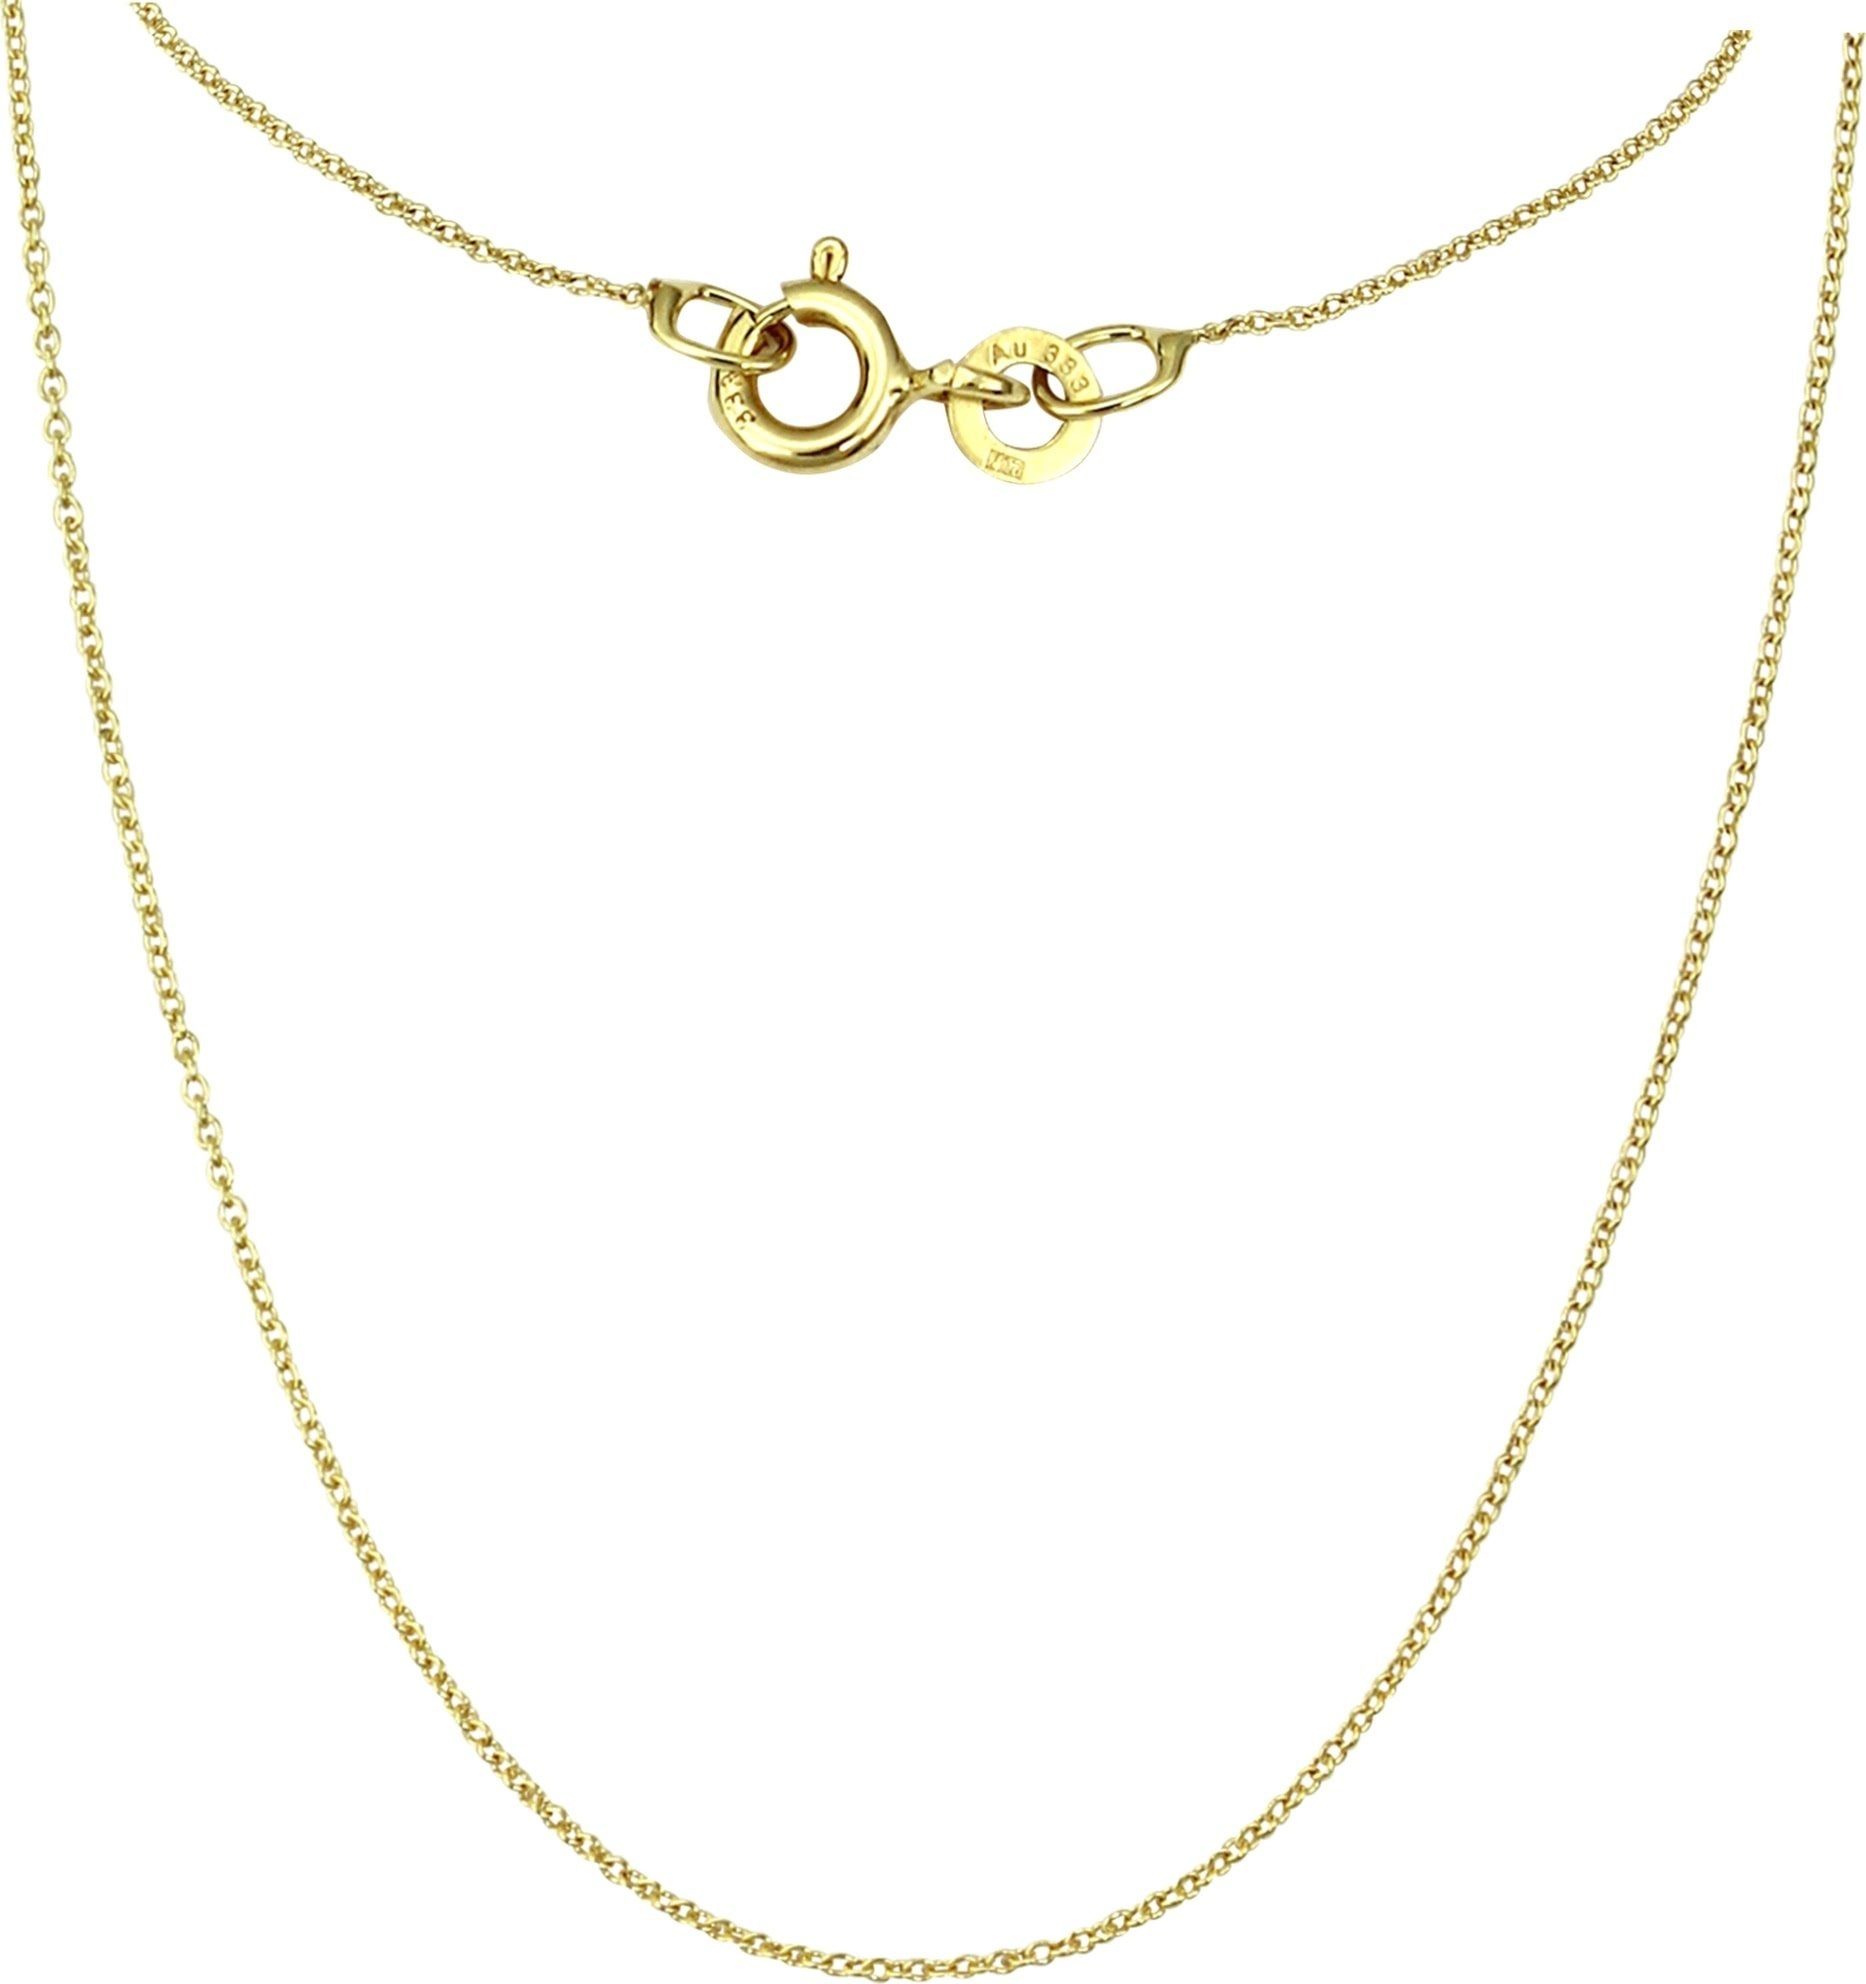 GoldDream Goldkette »GDKB00555Y GoldDream Damen Colliers Halskette 55cm«  (Collier, Collier), Damen Colliers Halskette 55cm, 333 Gelbgold - 8 Karat,  Farbe: goldfarben online kaufen | OTTO